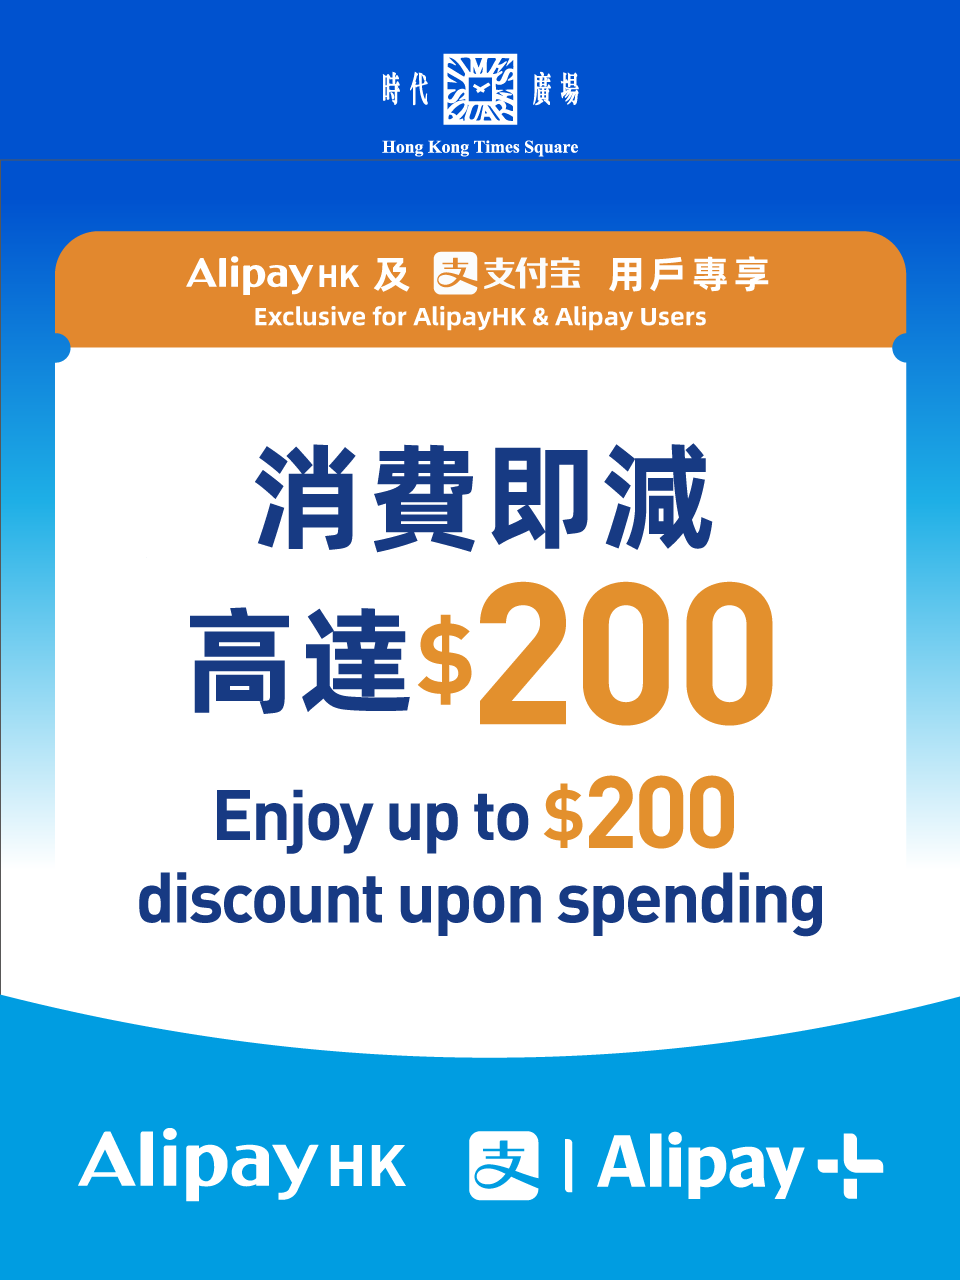 Alipay x 时代广场 9-10月限定奖赏